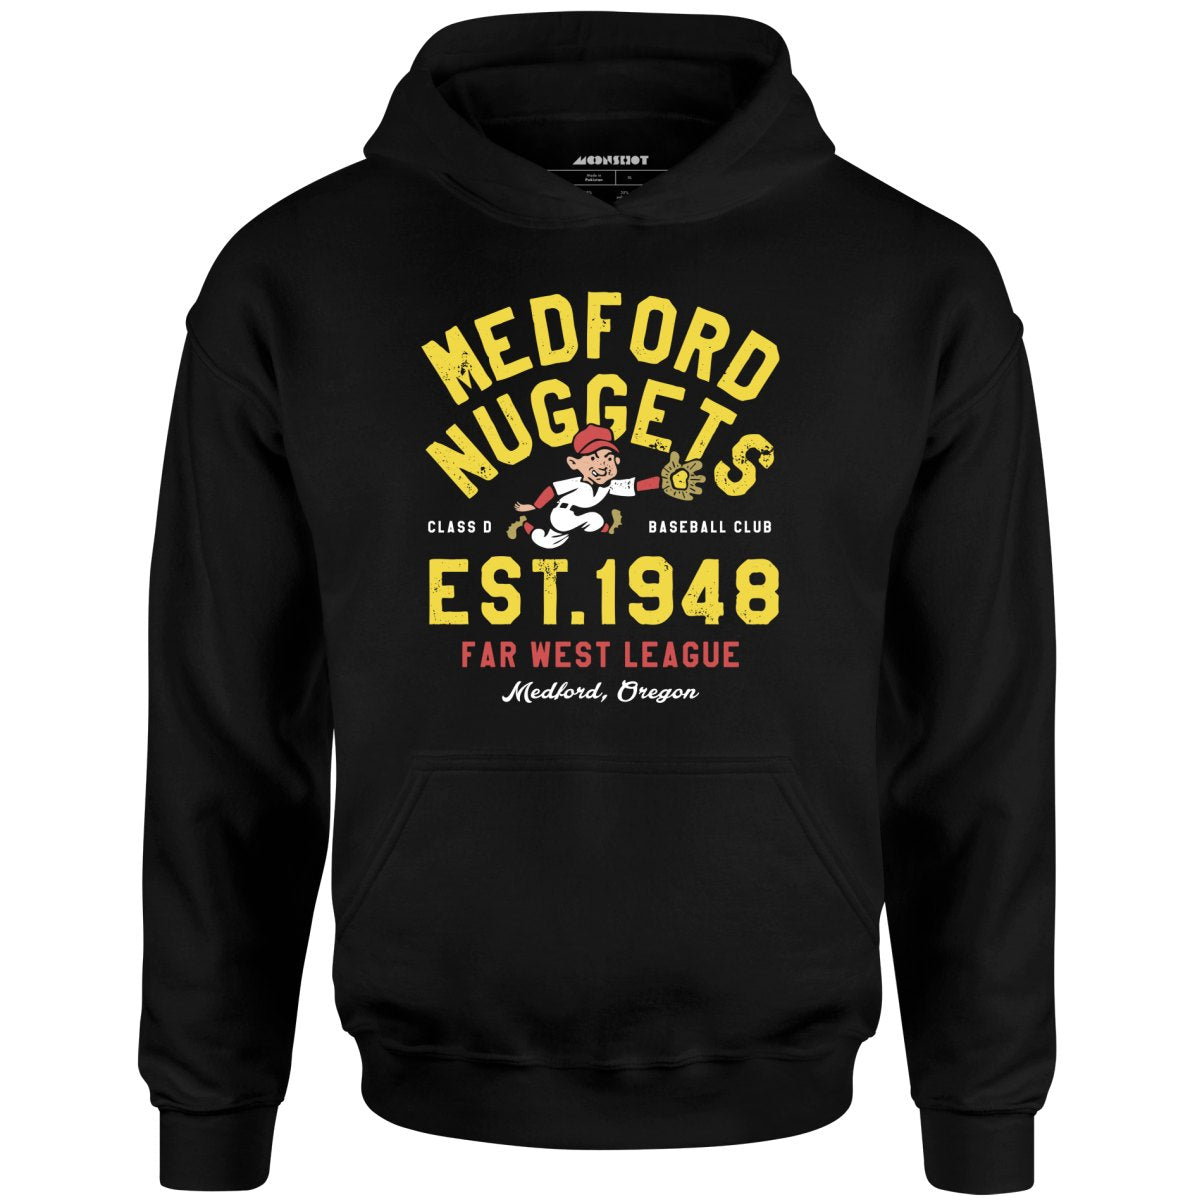 Medford Nuggets - Oregon - Vintage Defunct Baseball Teams - Unisex Hoodie